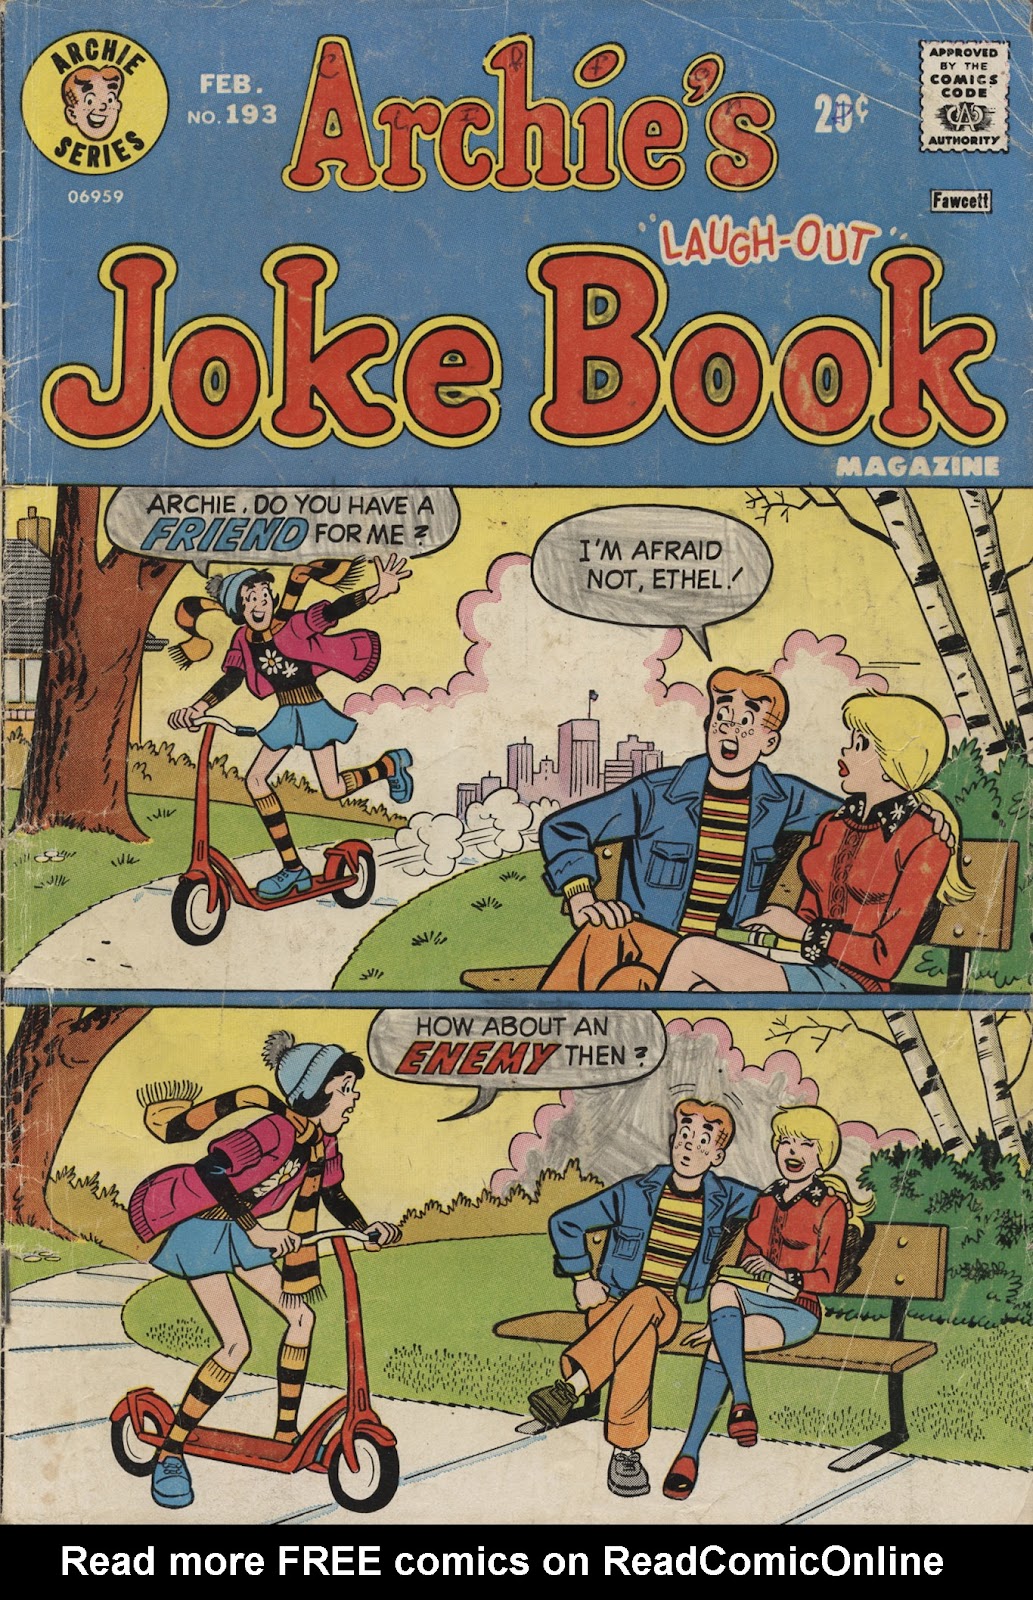 Archie's Joke Book Magazine issue 193 - Page 1